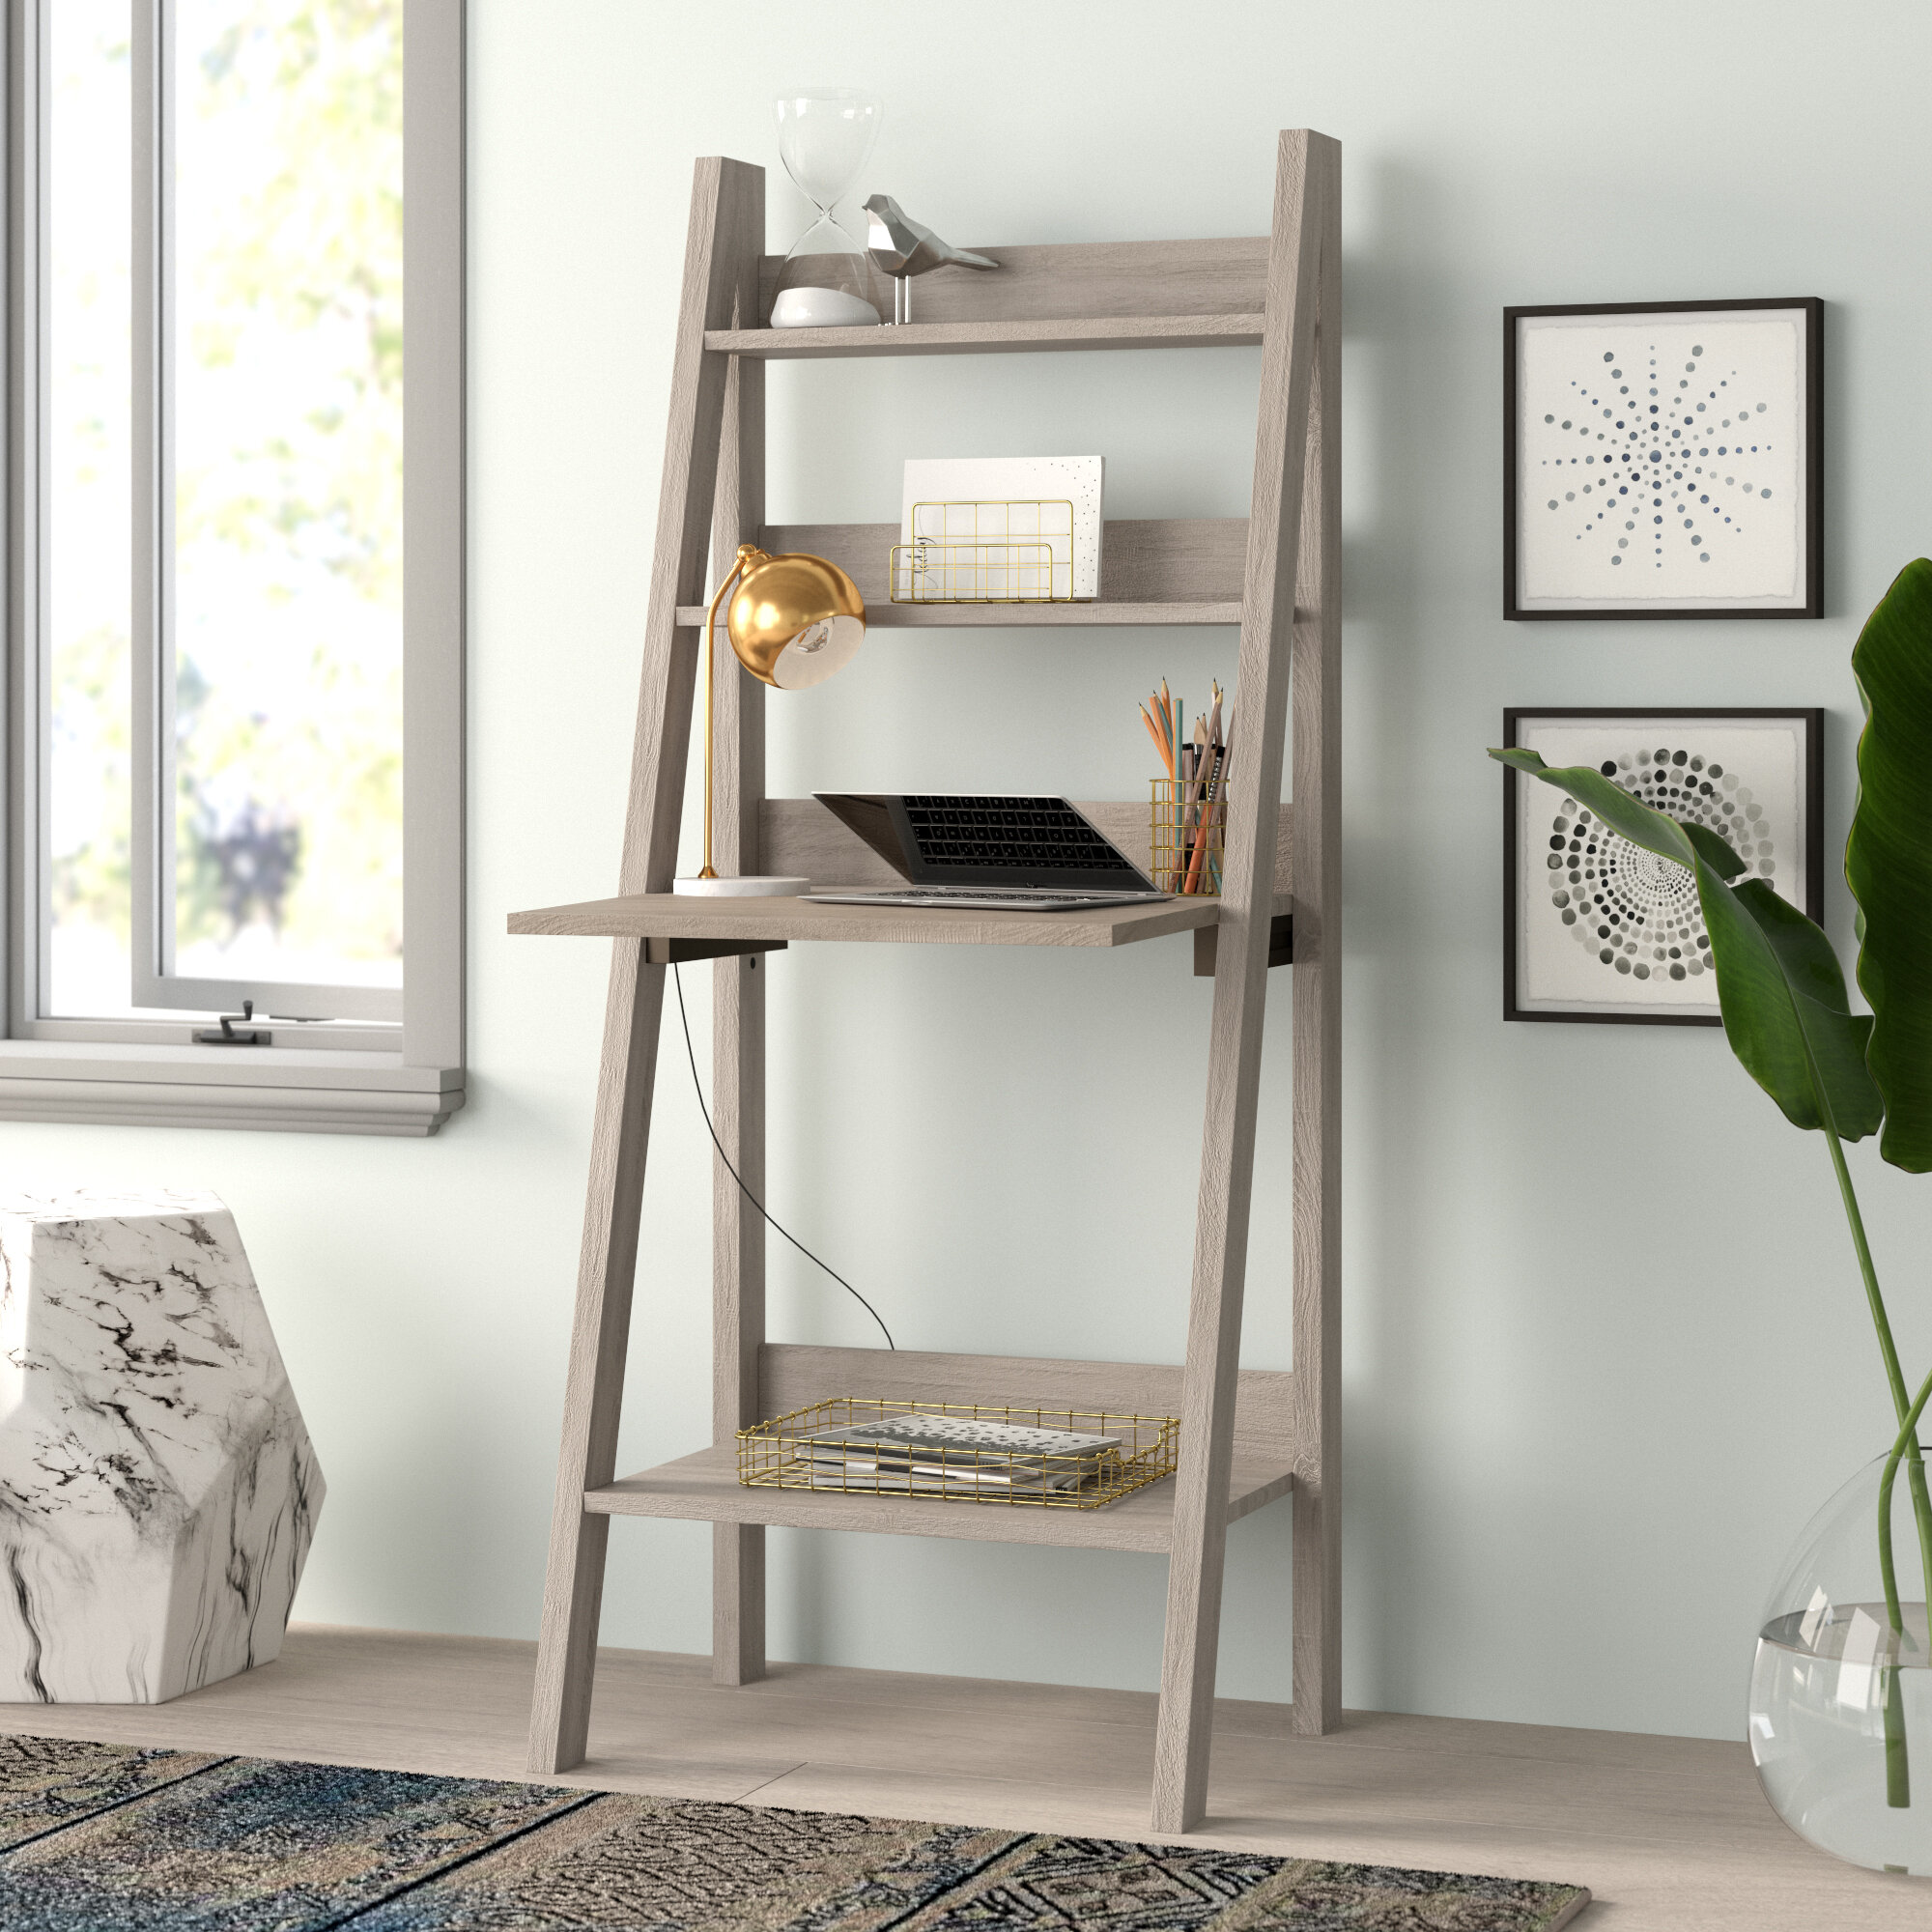 Wrought Studio Feist Ladder Desk Reviews Wayfair